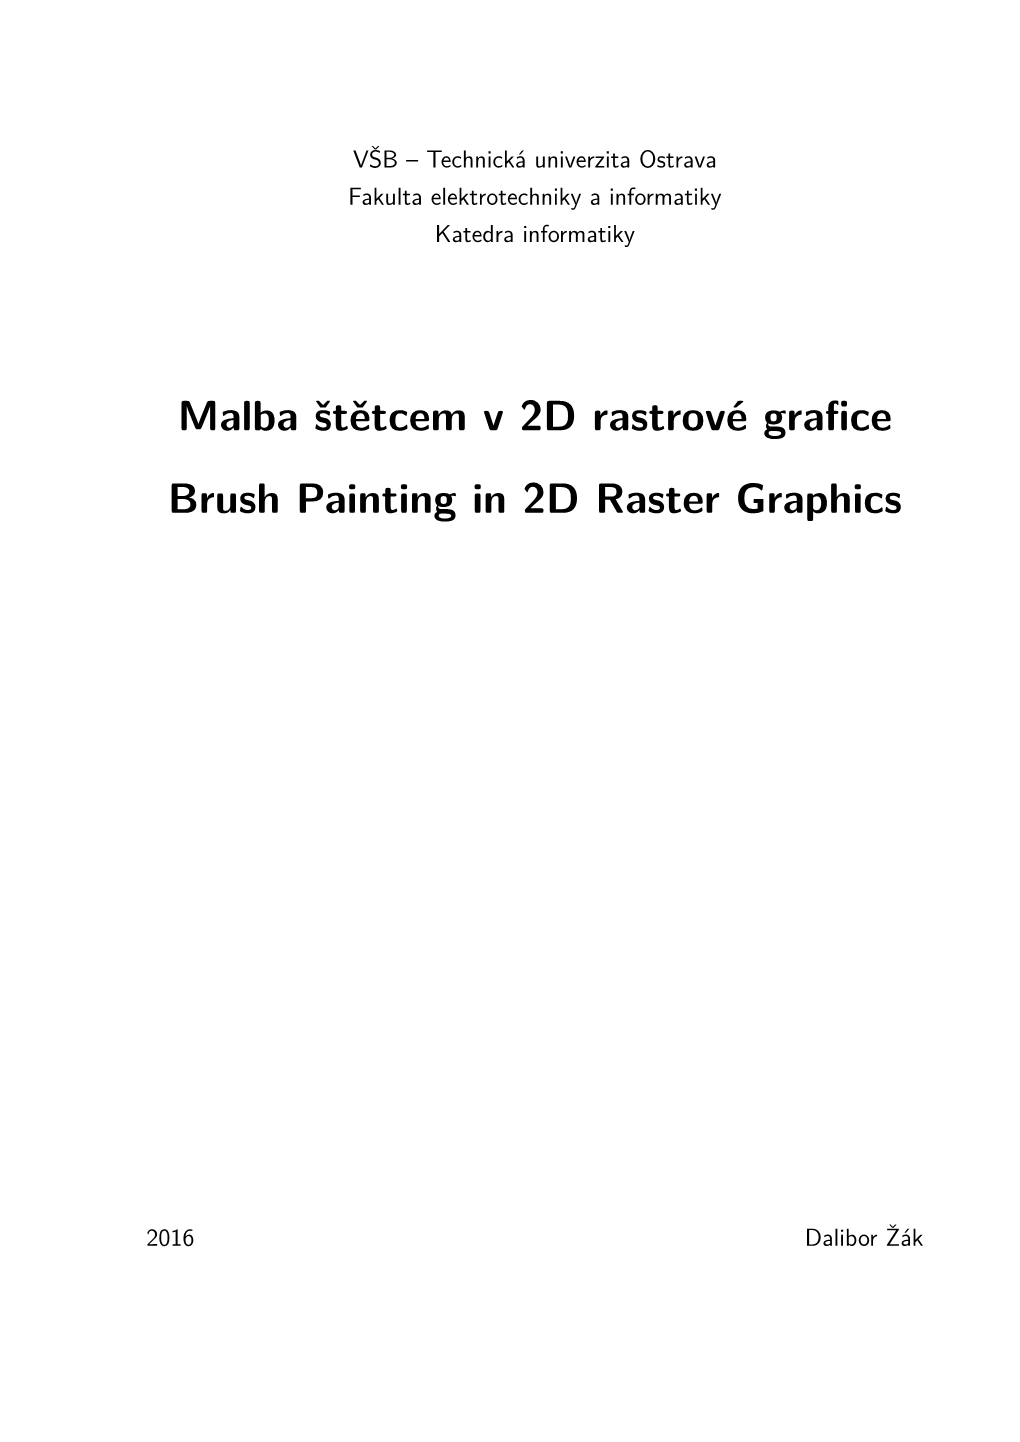 Malba Štětcem V 2D Rastrové Grafice Brush Painting in 2D Raster Graphics